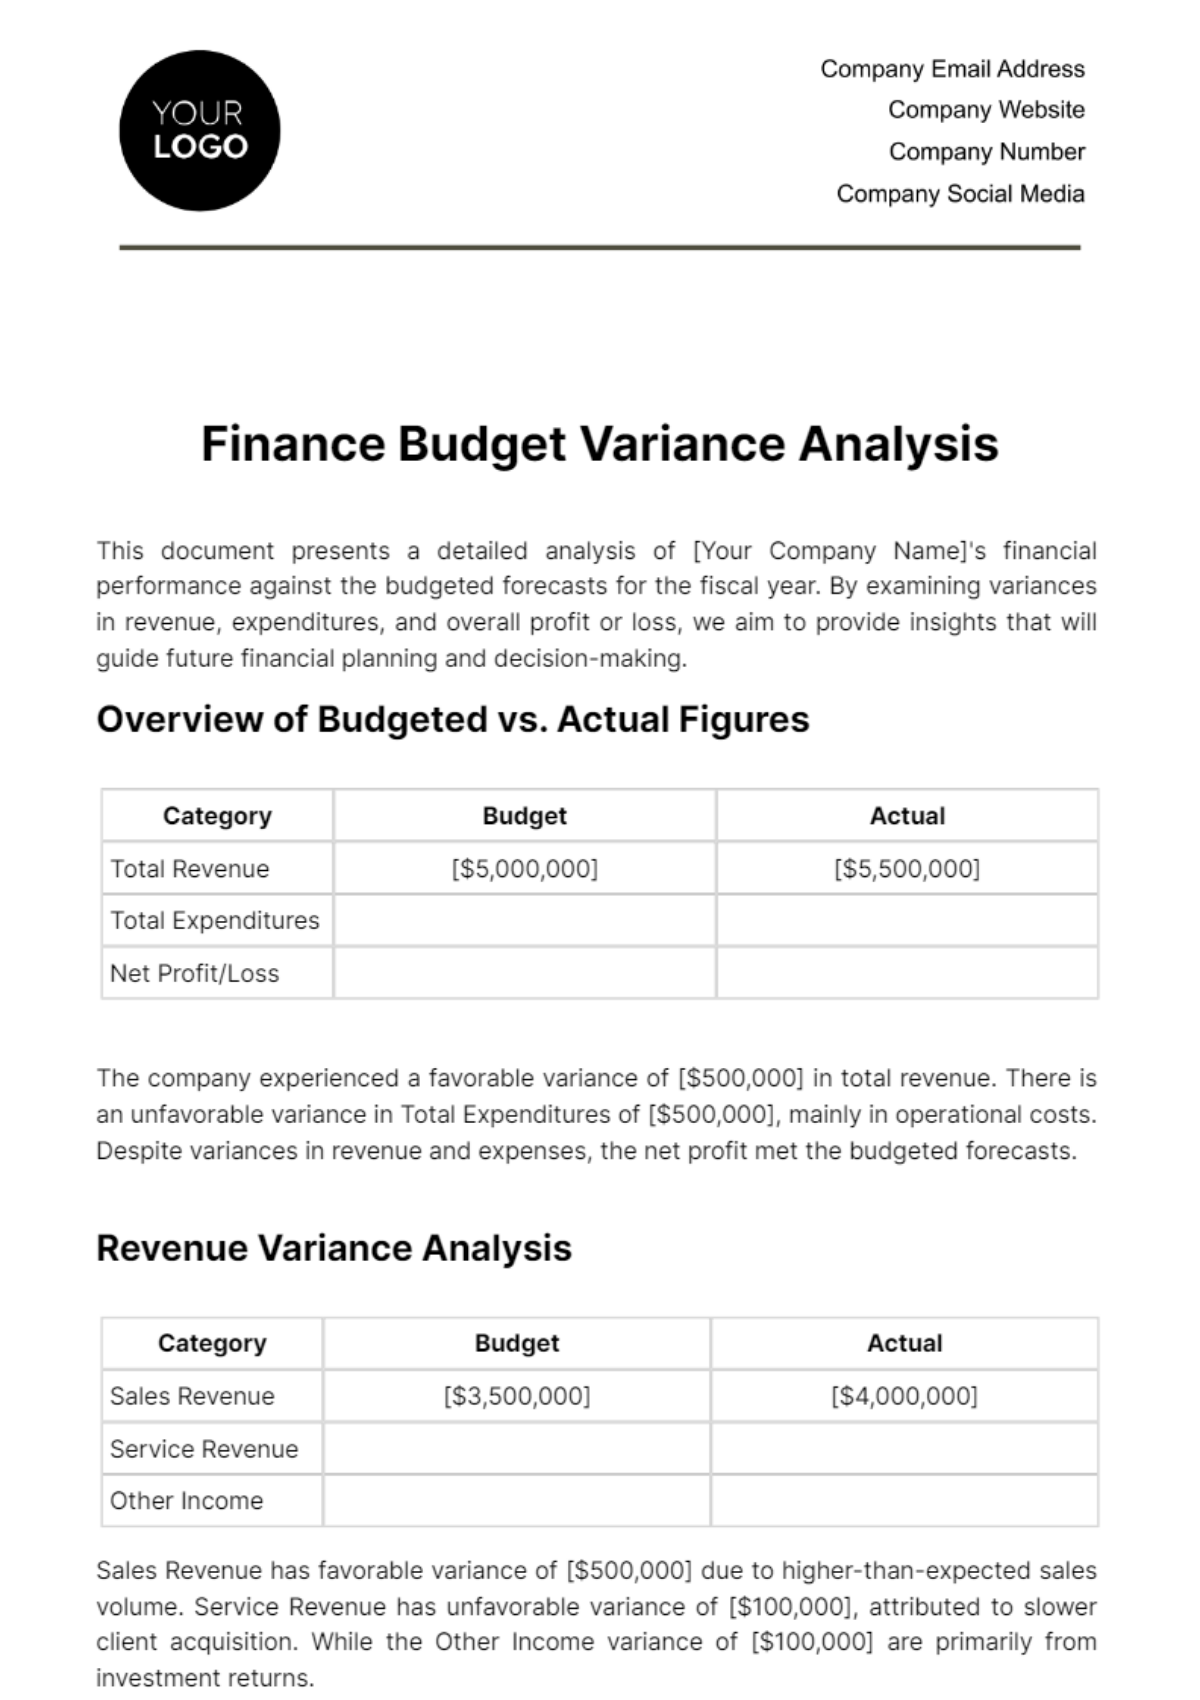 Free Finance Budget Variance Analysis Template